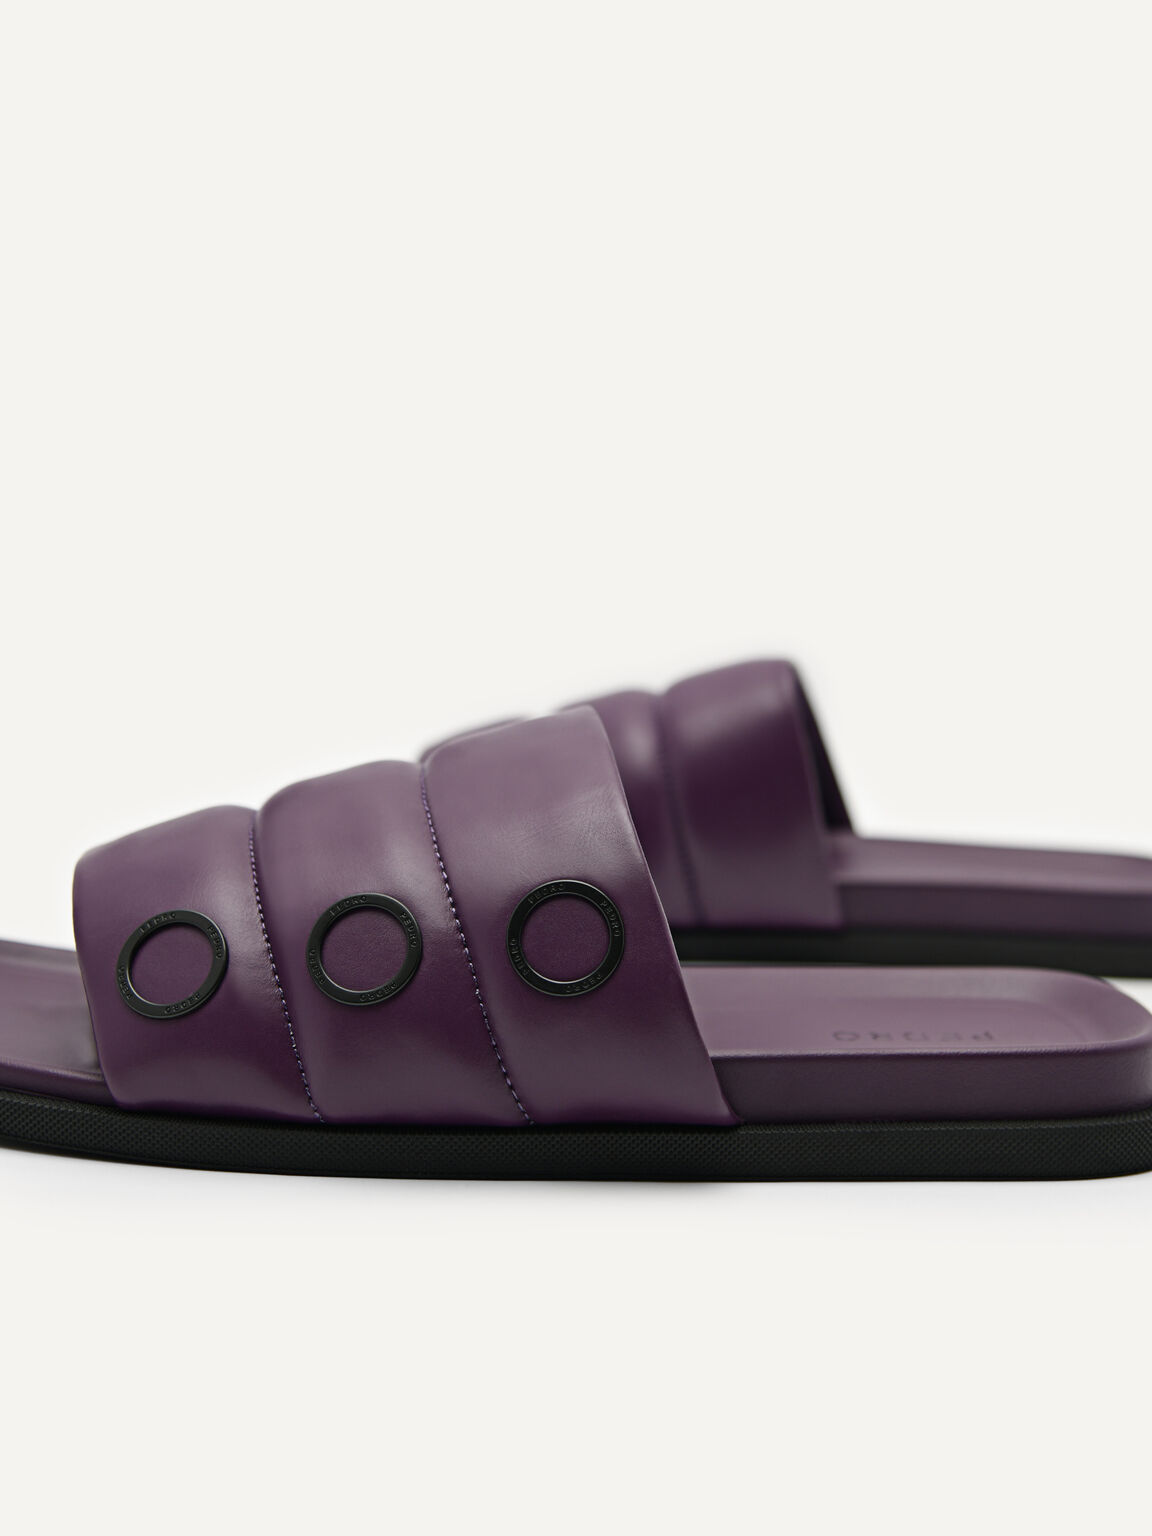 Puff Slide Sandals, Dark Purple, hi-res